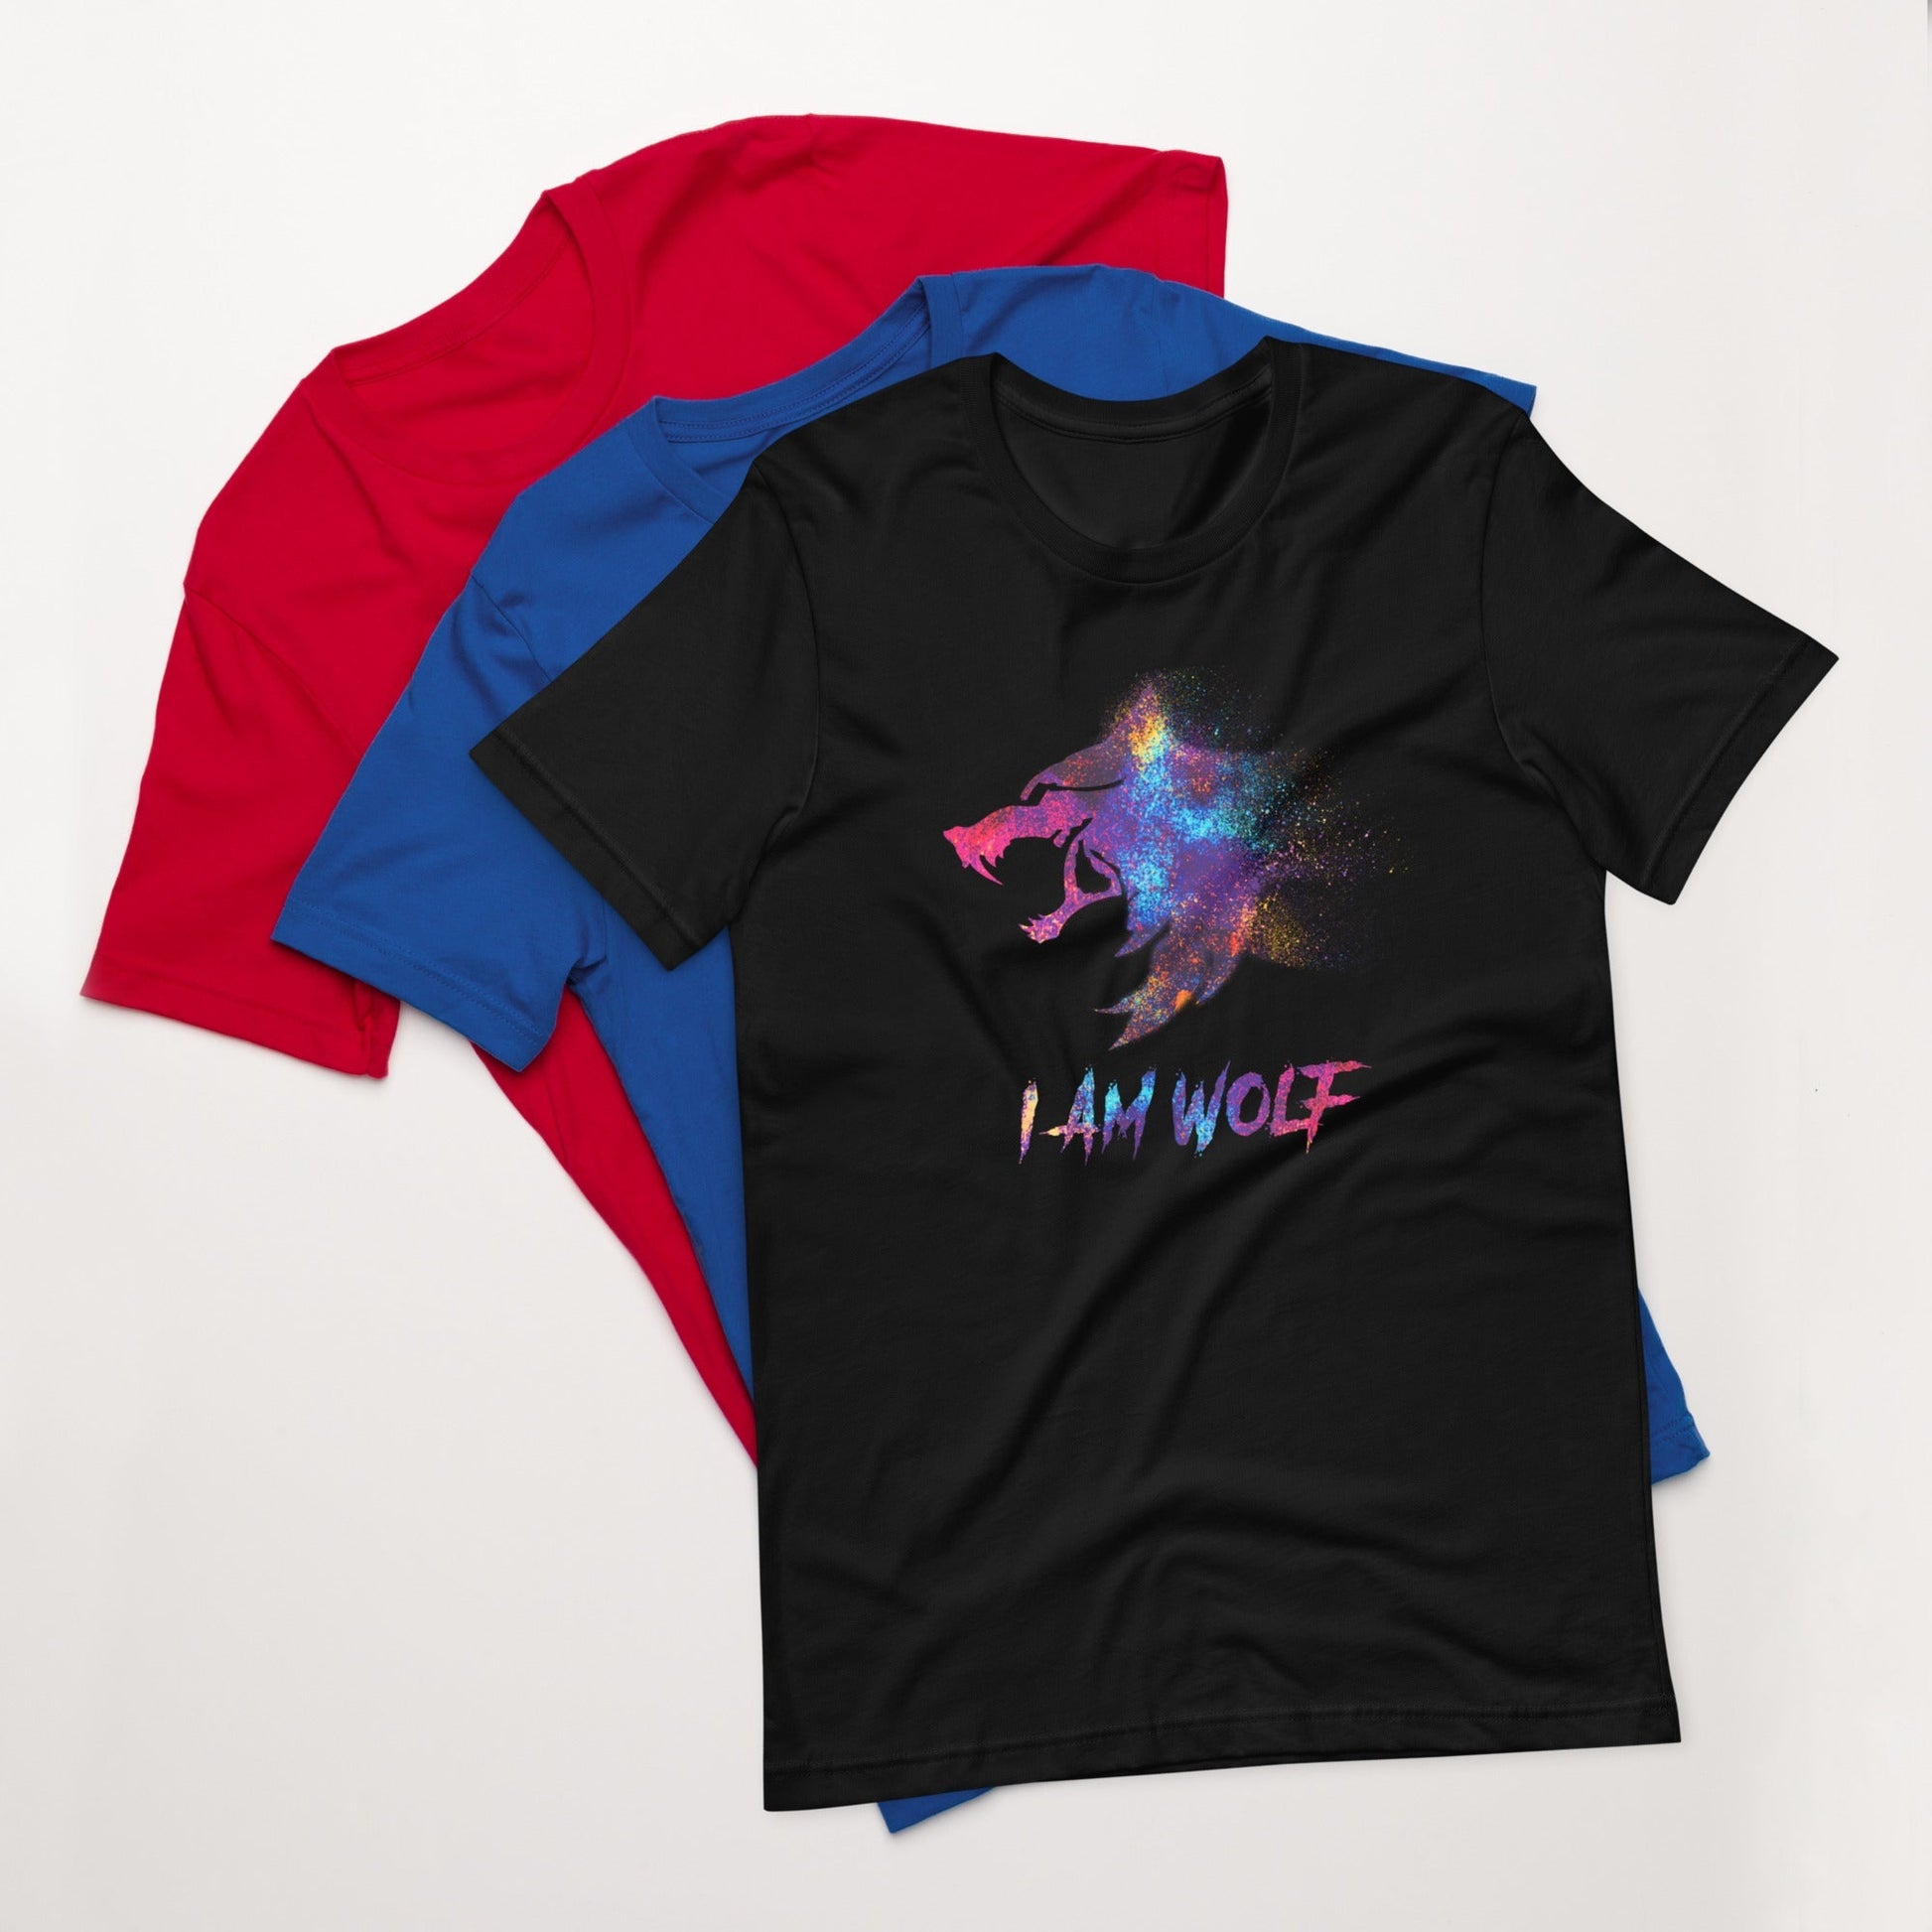 I AM WOLF Rainbow Graphic T-Shirt - DoggyLoveandMore